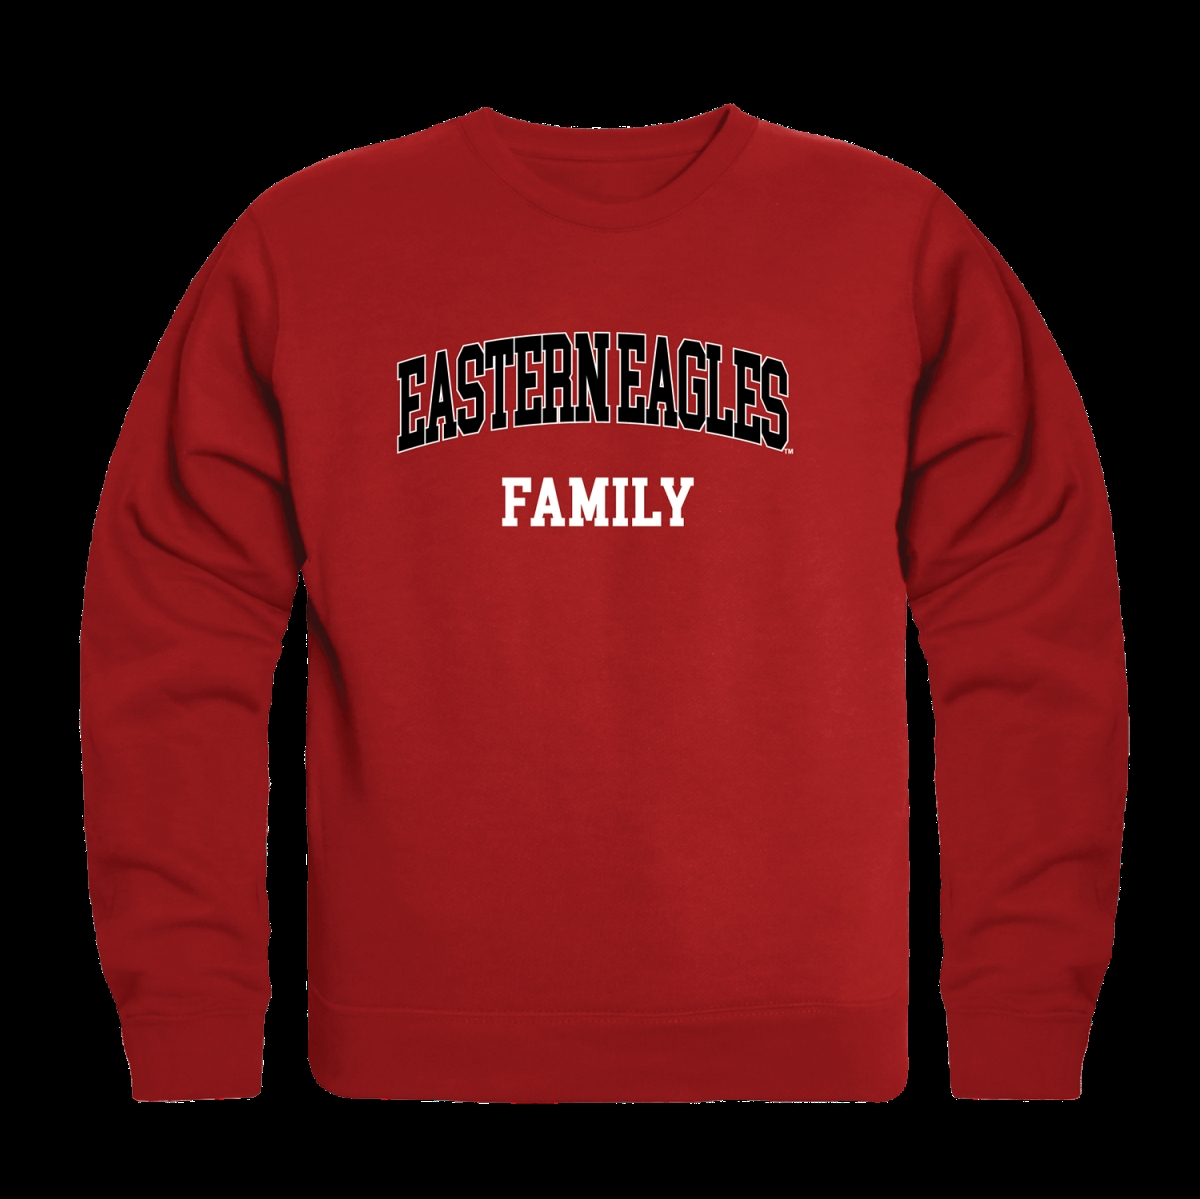 W Republic 572-296-RED-01 Eastern Washington University Eagles Family Crewneck Sweatshirt&#44; Red - Small